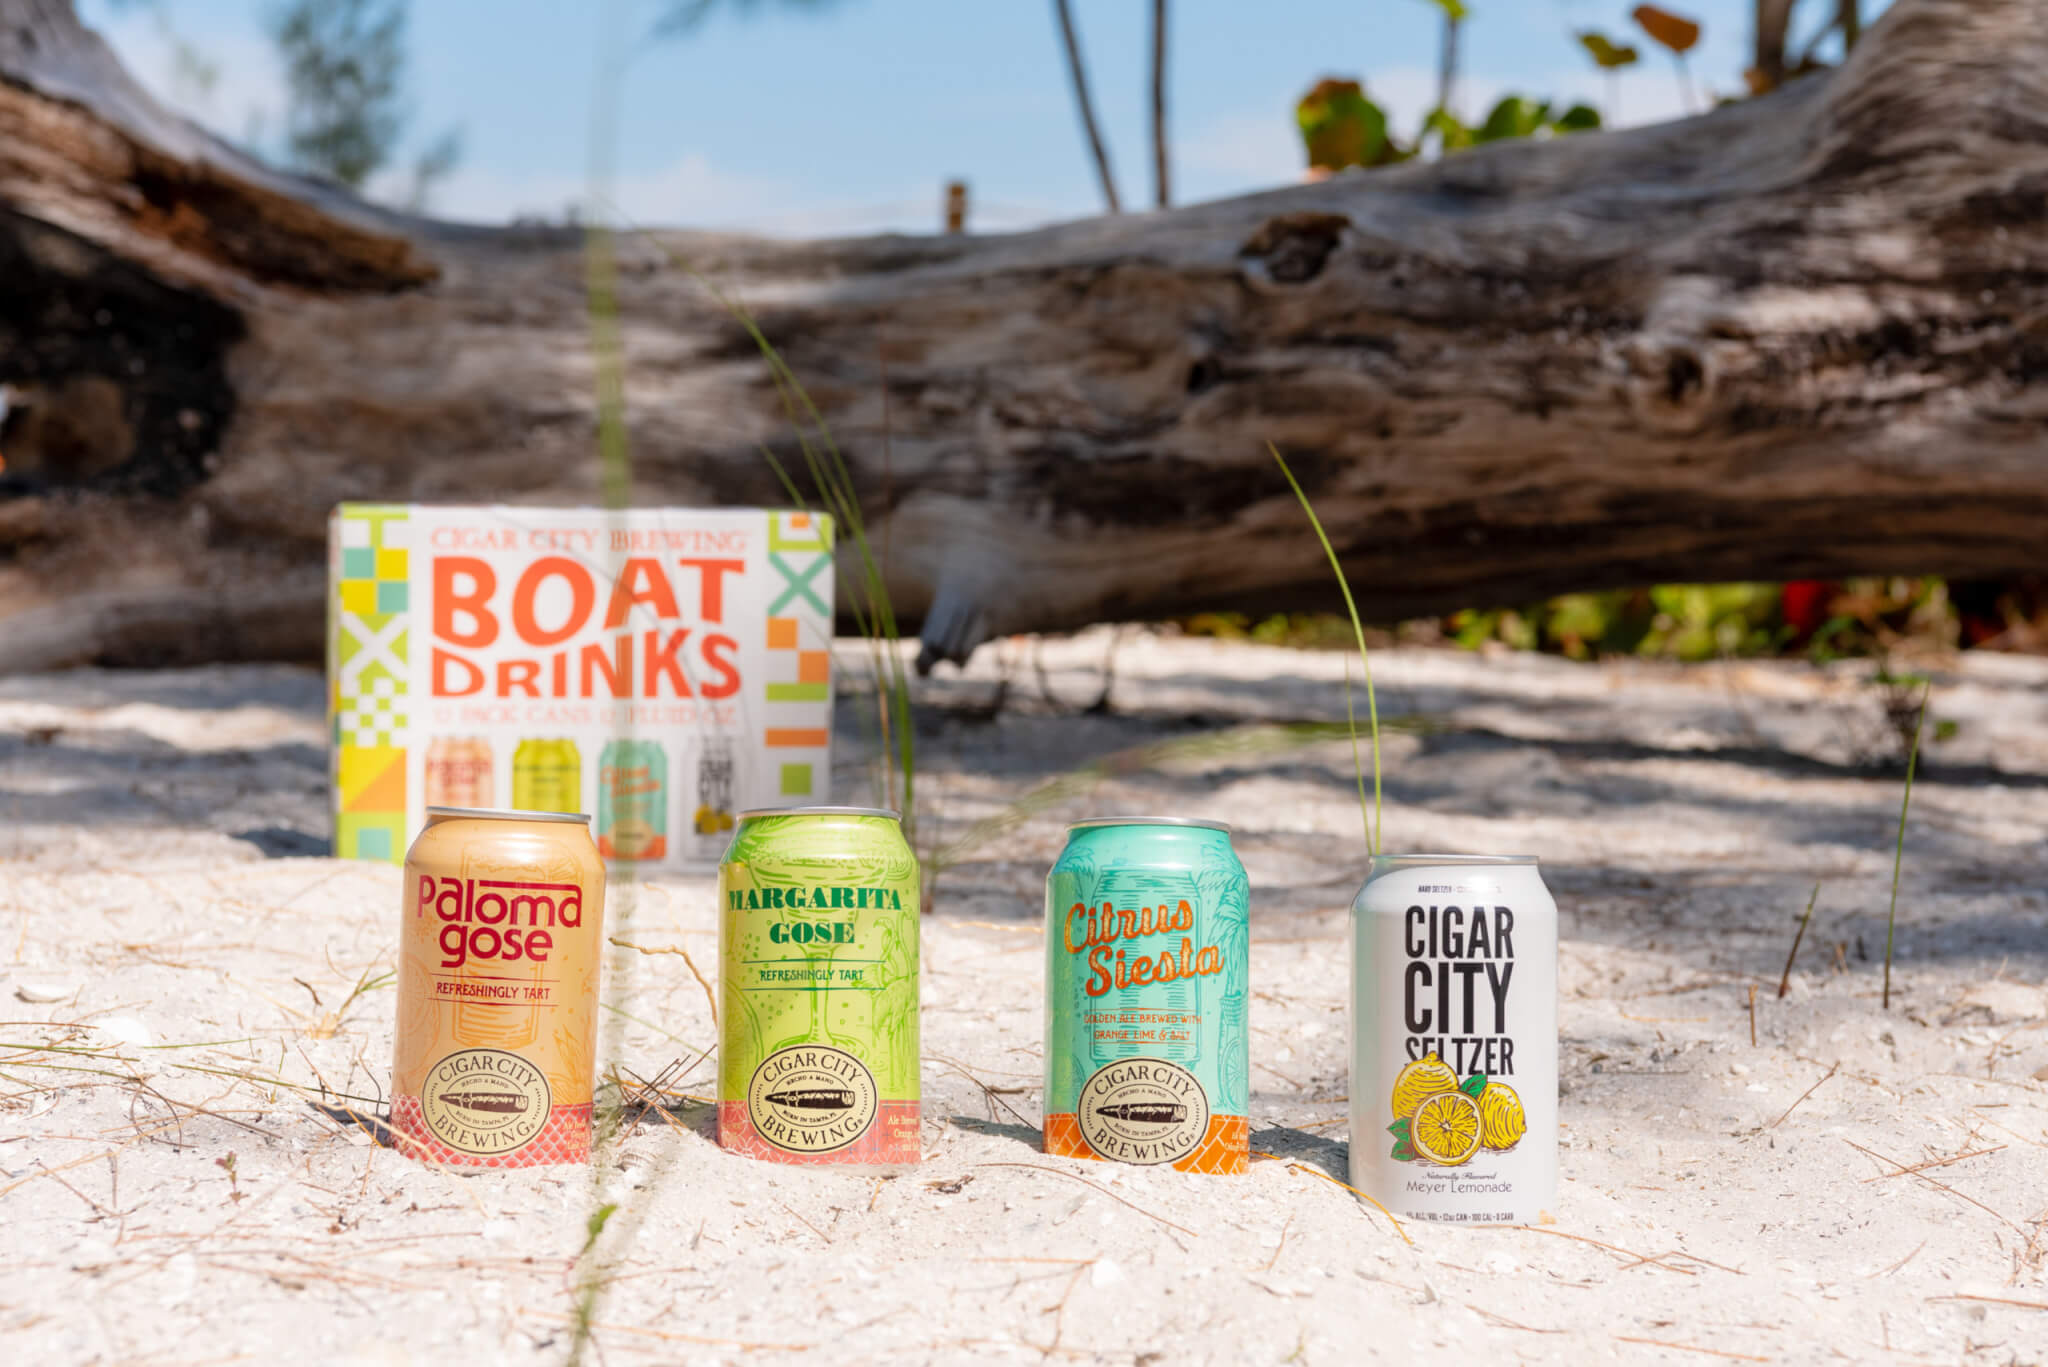 Cigar City Brewing's Boat Drinks Mixed 12 pack, featuring Paloma Gose, Margarita Gose, Citrus Siesta Golden Ale, and Cigar City Meyer Lemonade Hard Seltzer.